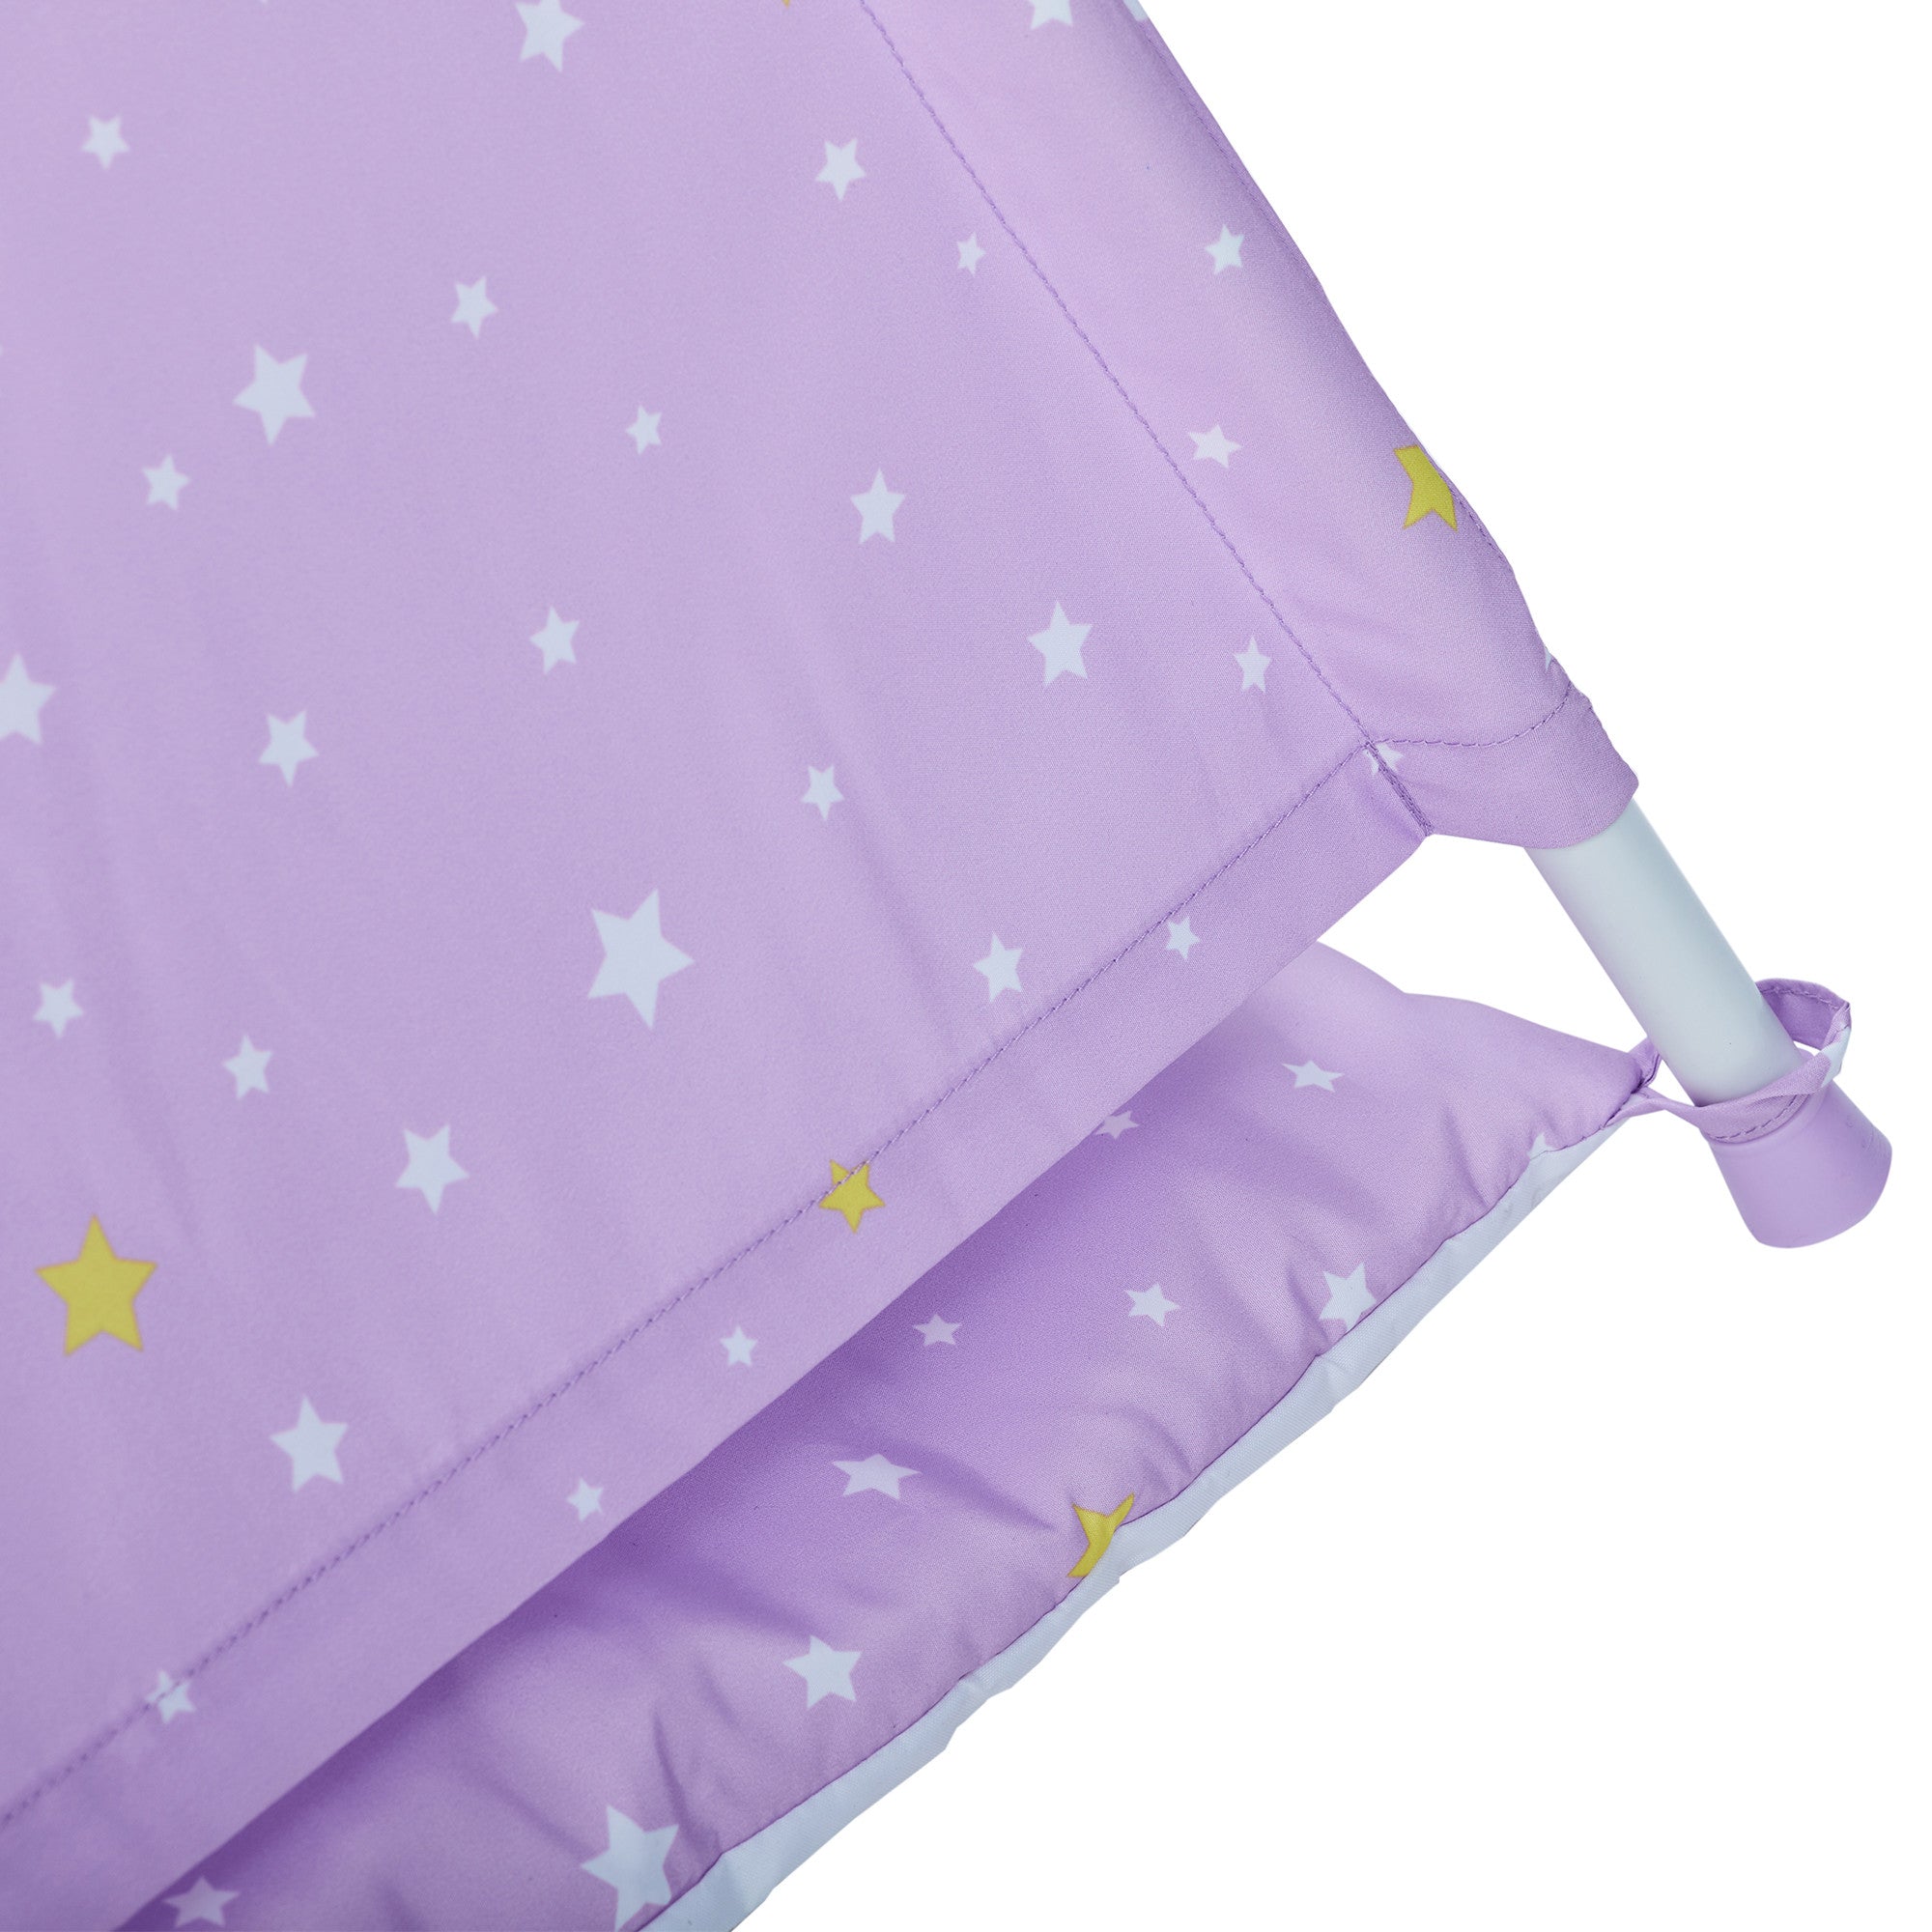 Teamson Kids - Happy Land Twinkle star Kids Teepee Tents - Purple / White